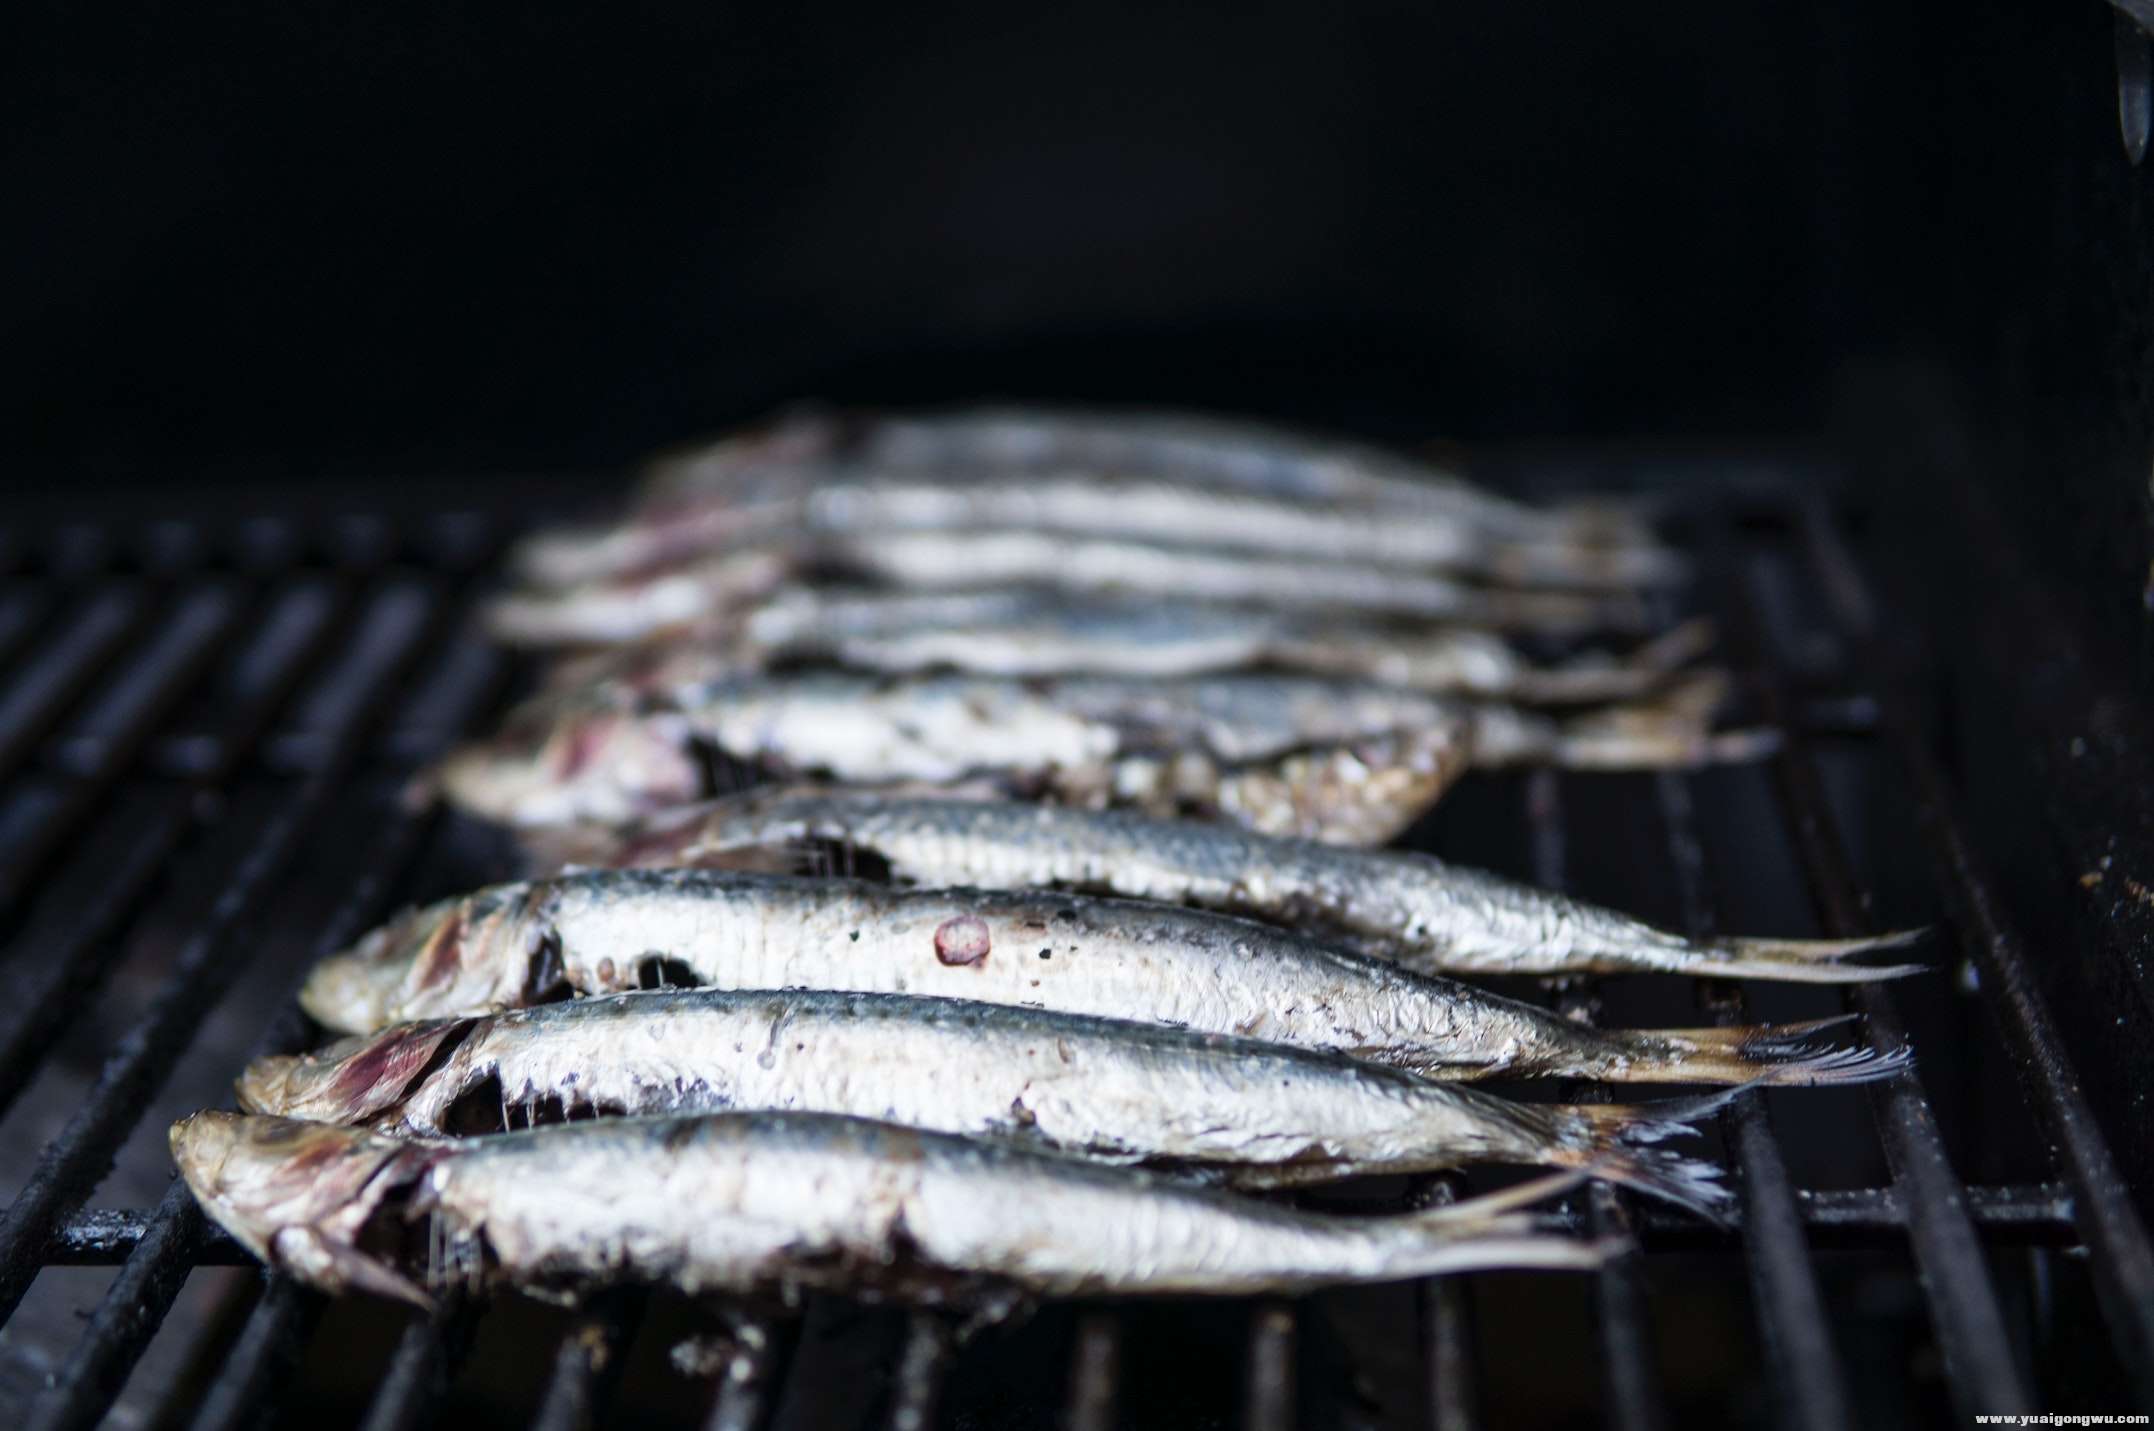 photo-of-raw-fish-on-grill-1321124.jpg